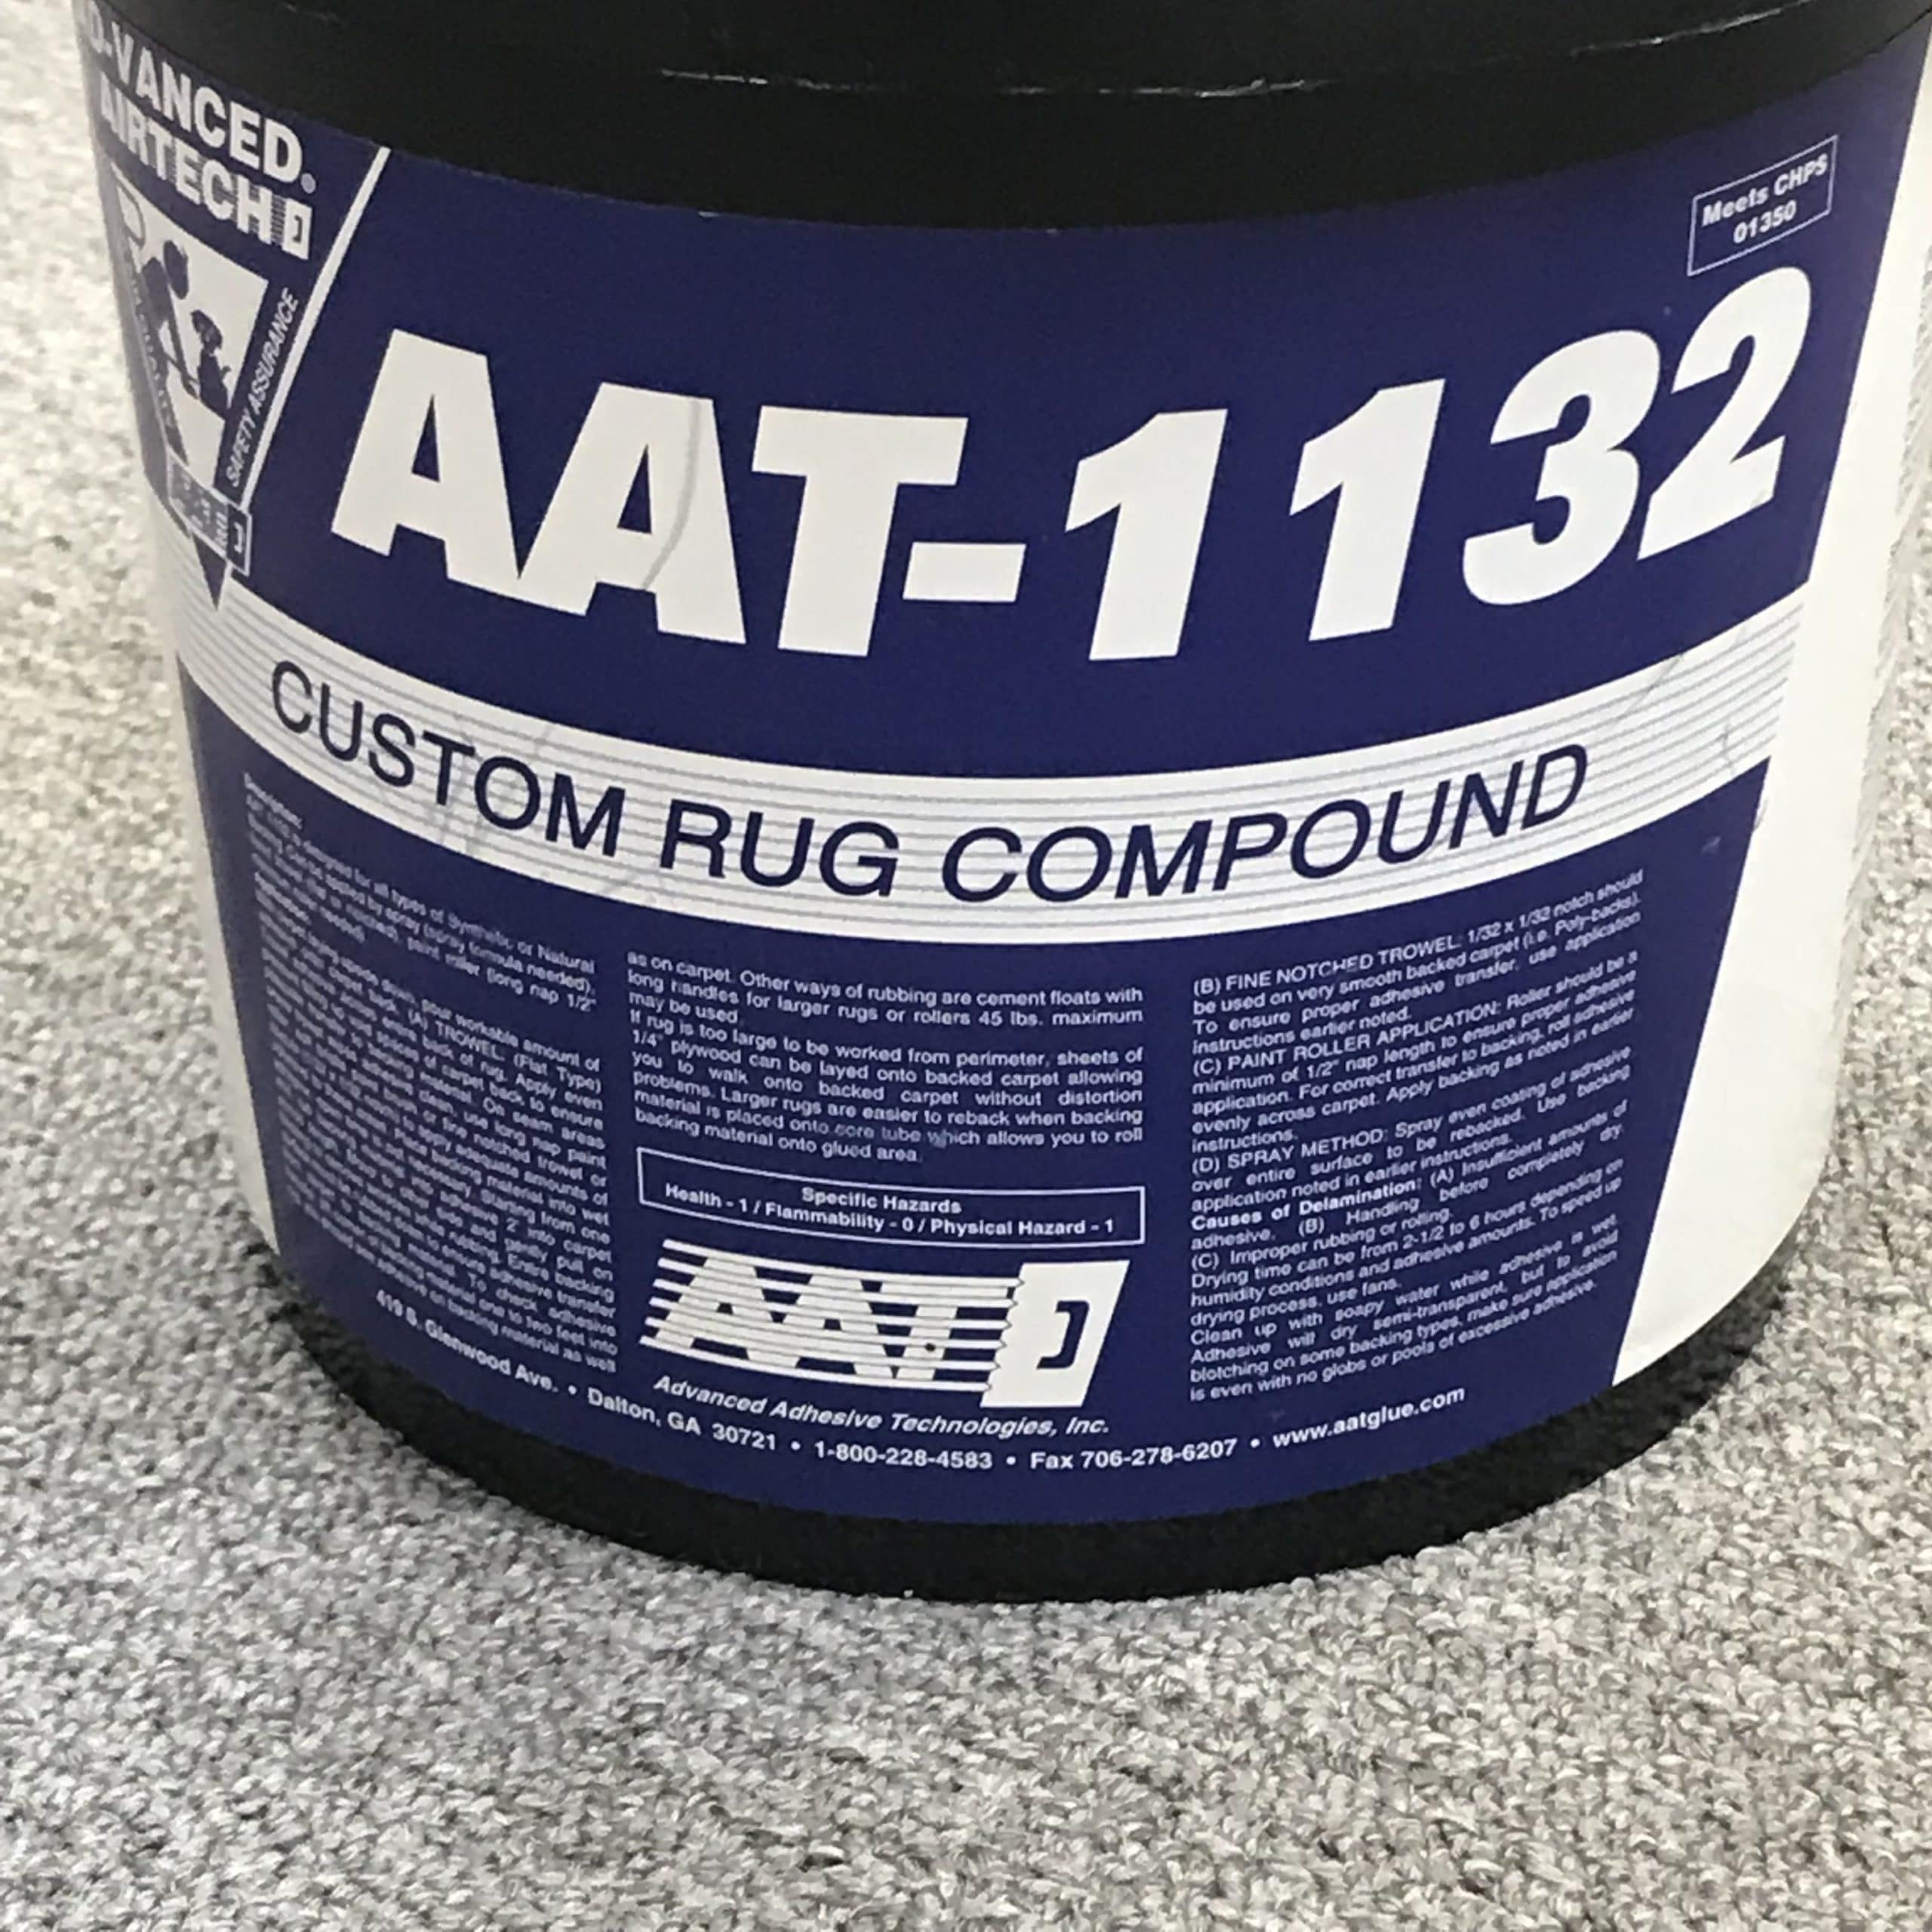 1132 Synthetic Latex Custom Rug Compound 1 Gallon jug - Bond